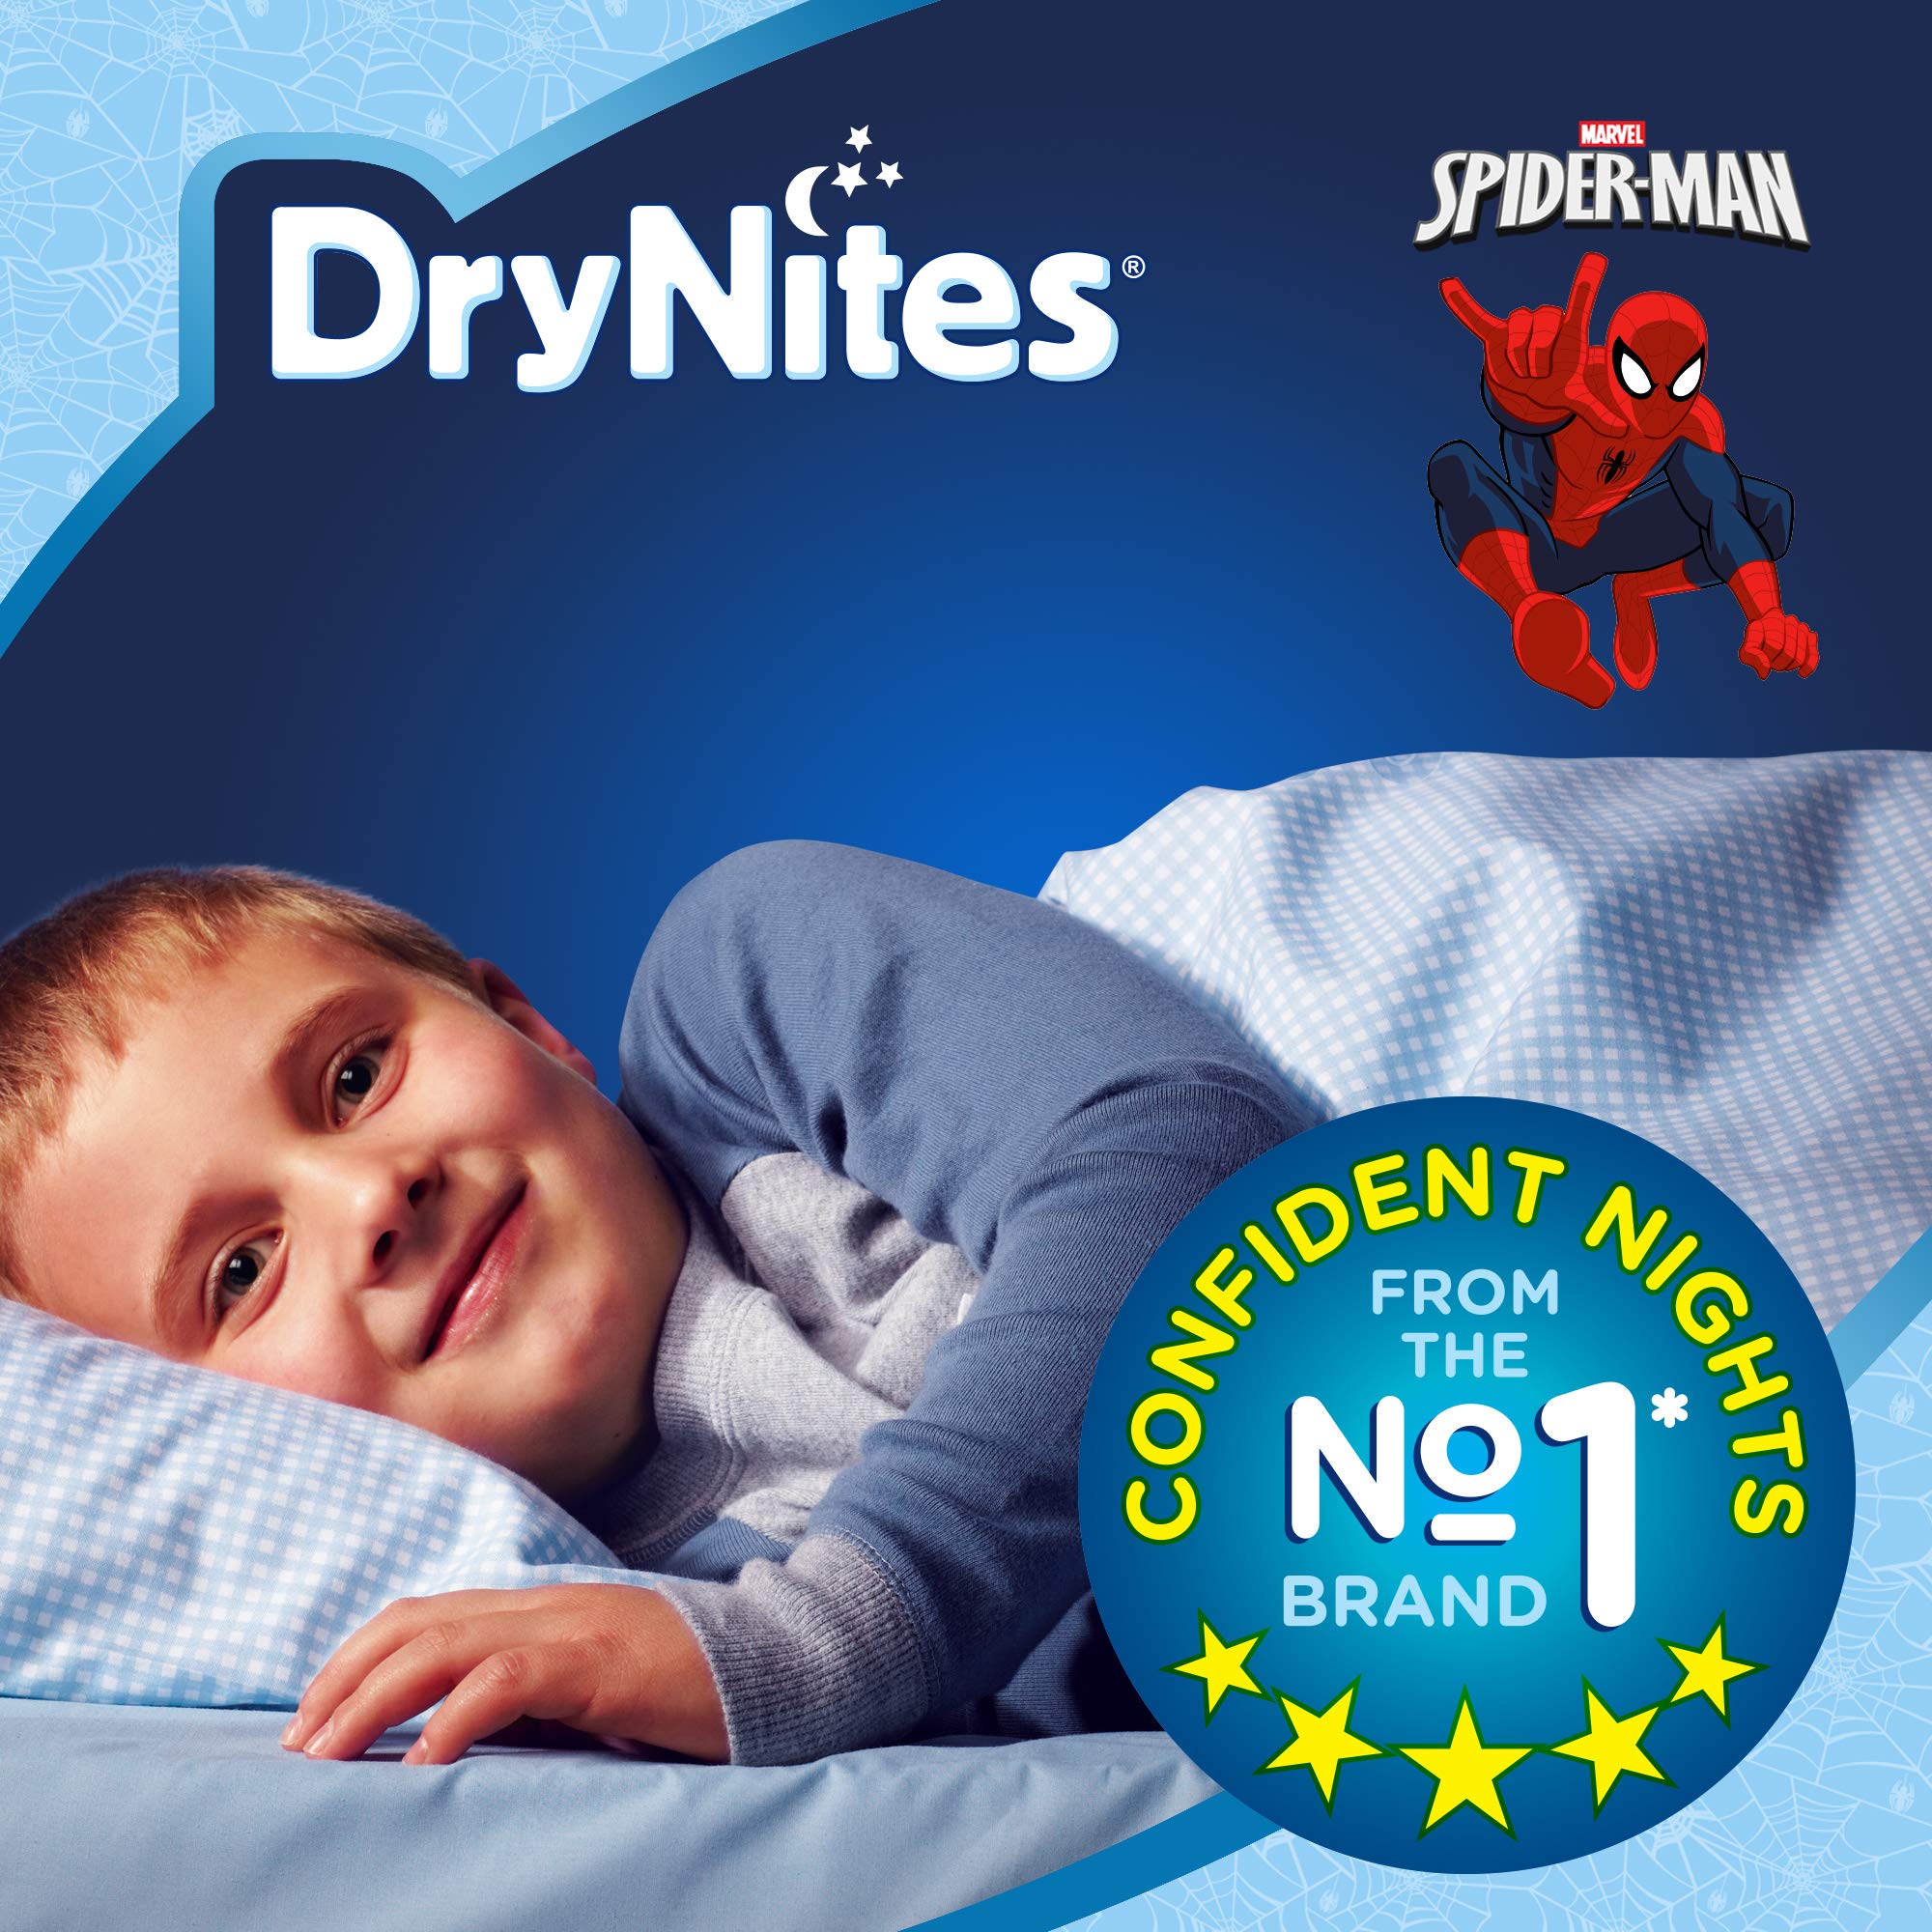 Drynites Boys Pyjama Pants 4-7 years 17-30kg 16pcs هجيز دراي نايتس ، كلوت بيجاما بانتس,(4-7 سنين) أولاد (17-30 كغم) 16 قطعة